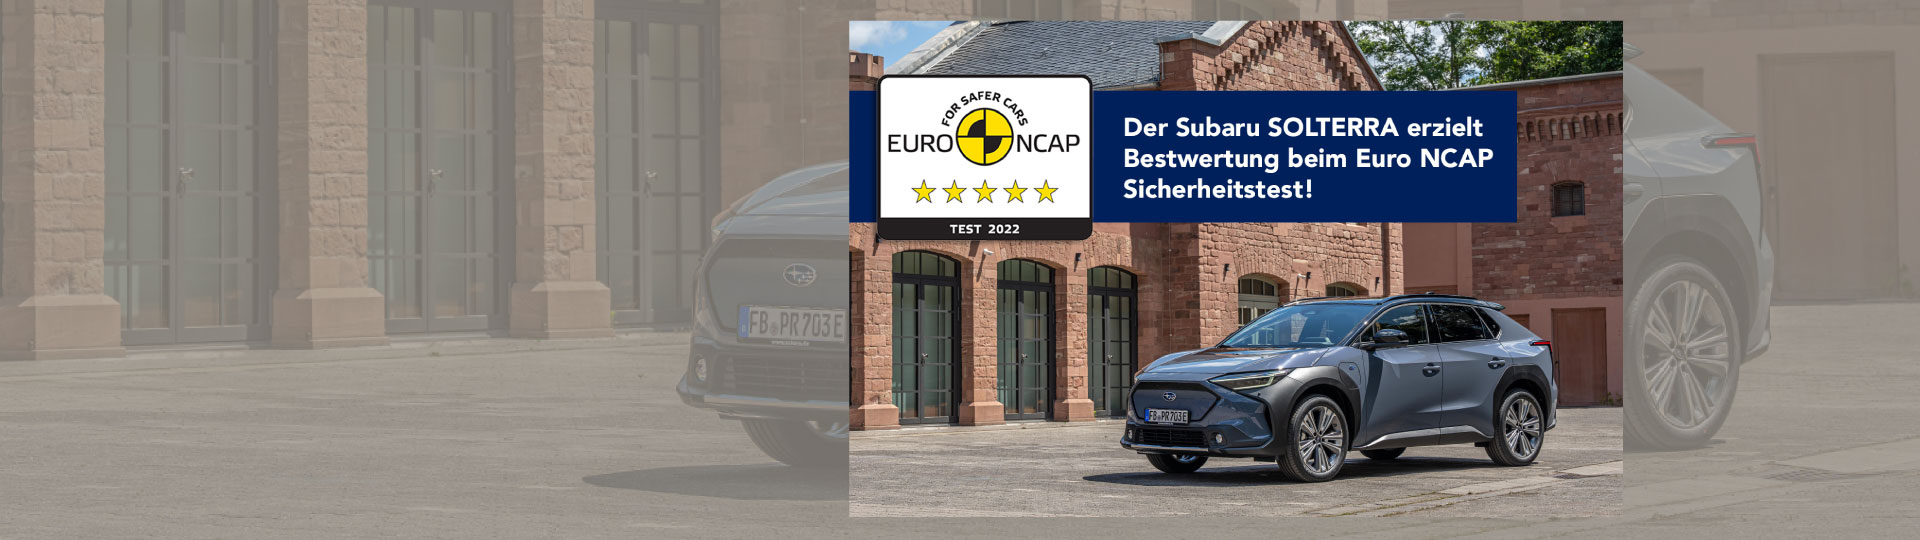 Subaru Solterra NCAP Autohaus Kuhn